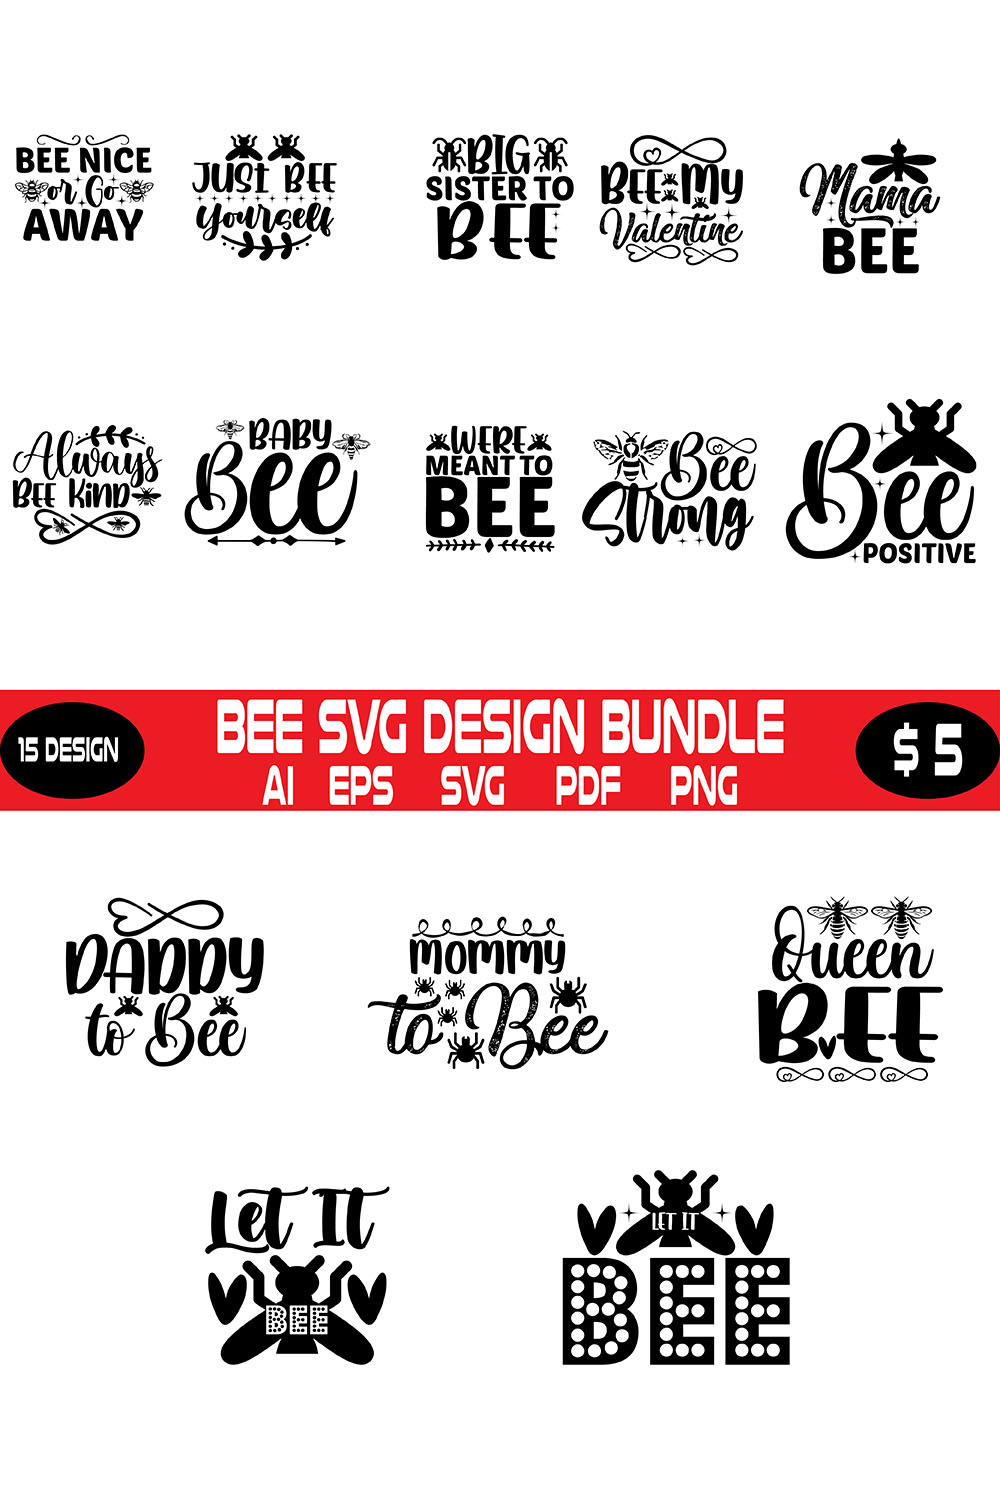 Bee Svg Design Bundle pinterest preview image.